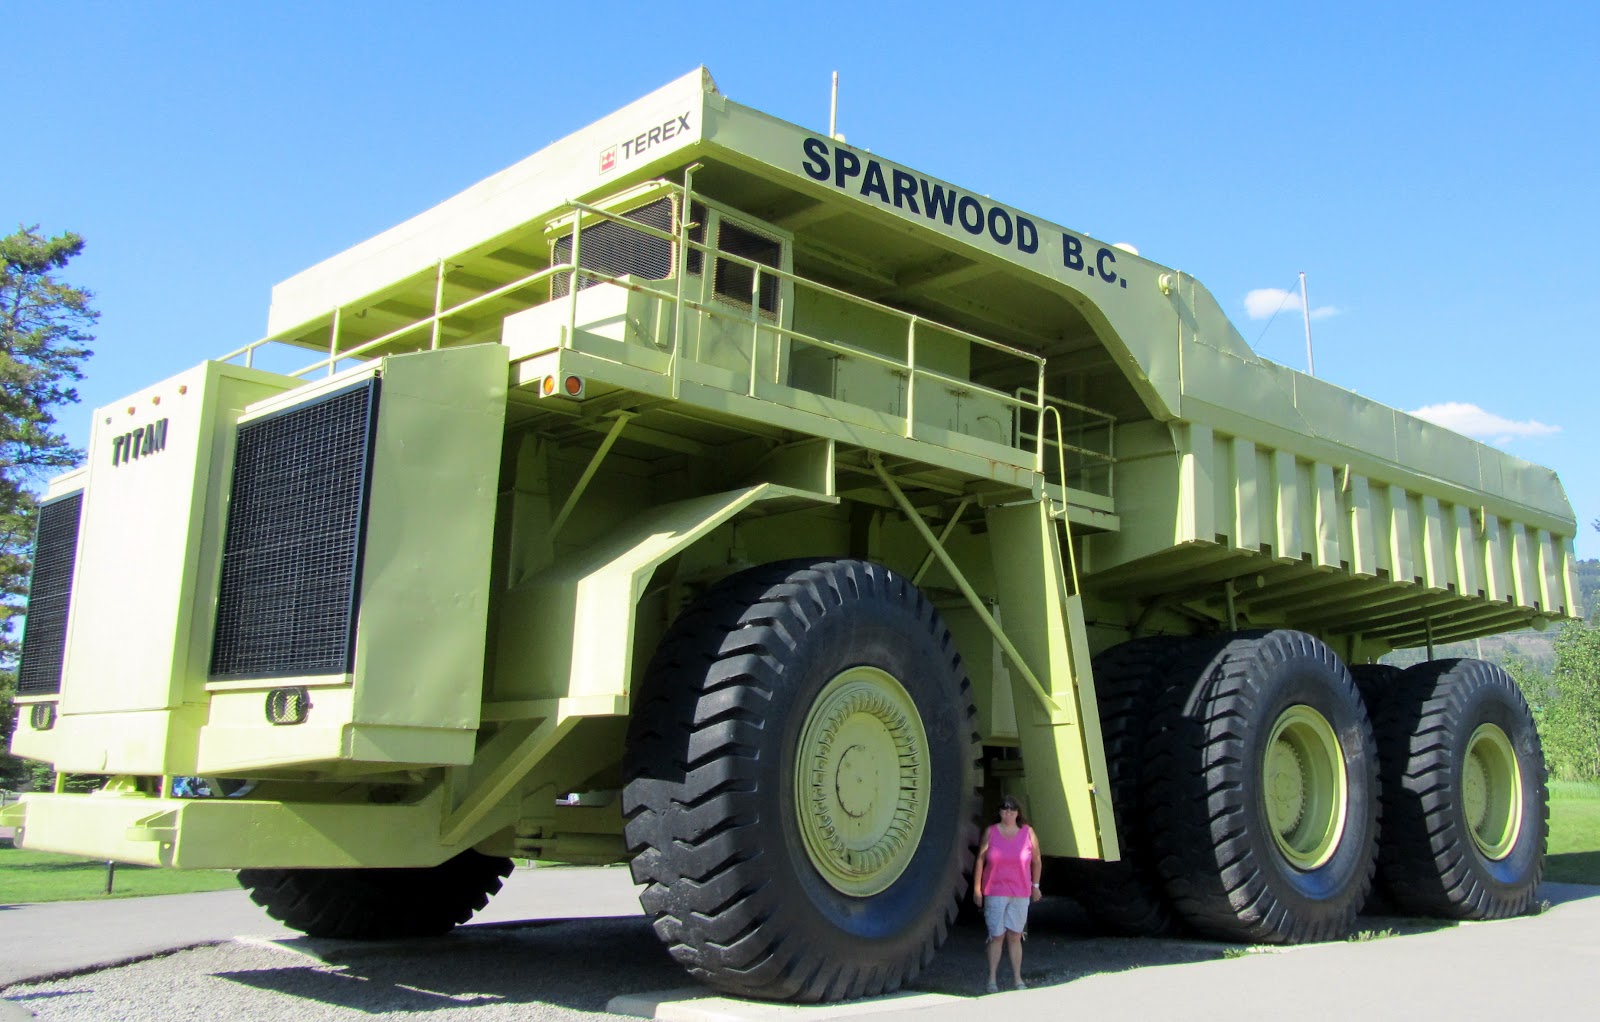 Cath In Canada: Biggest dump truck in the world?